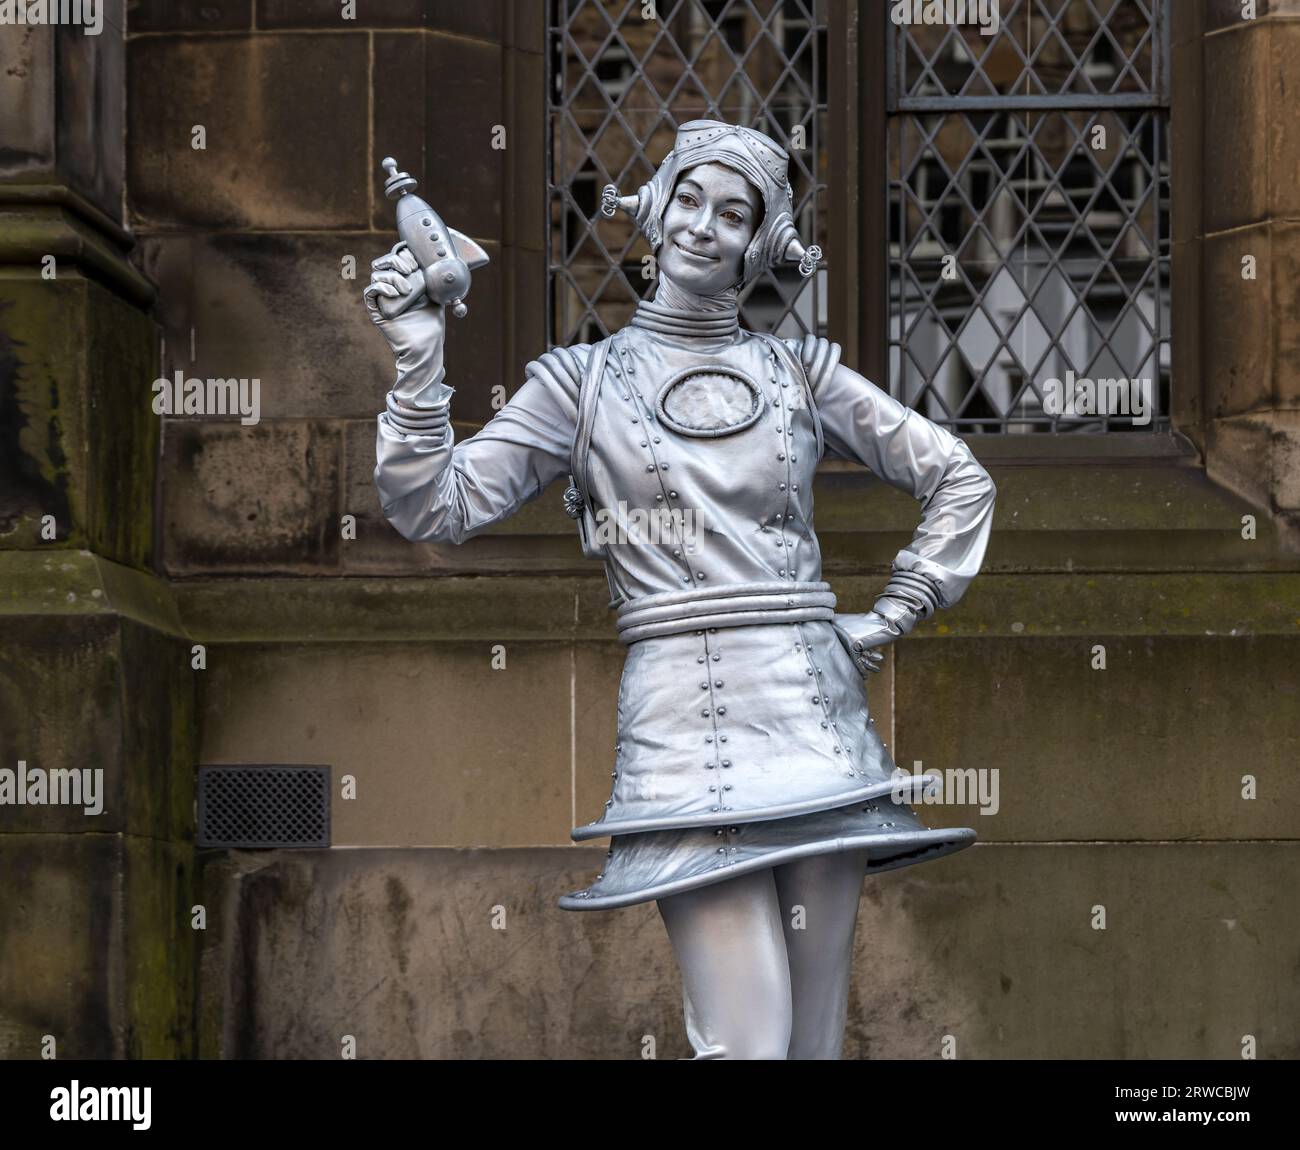 Living statue Street performer, Edinburgh Festival Fringe, Royal Mile, Scozia, Regno Unito Foto Stock